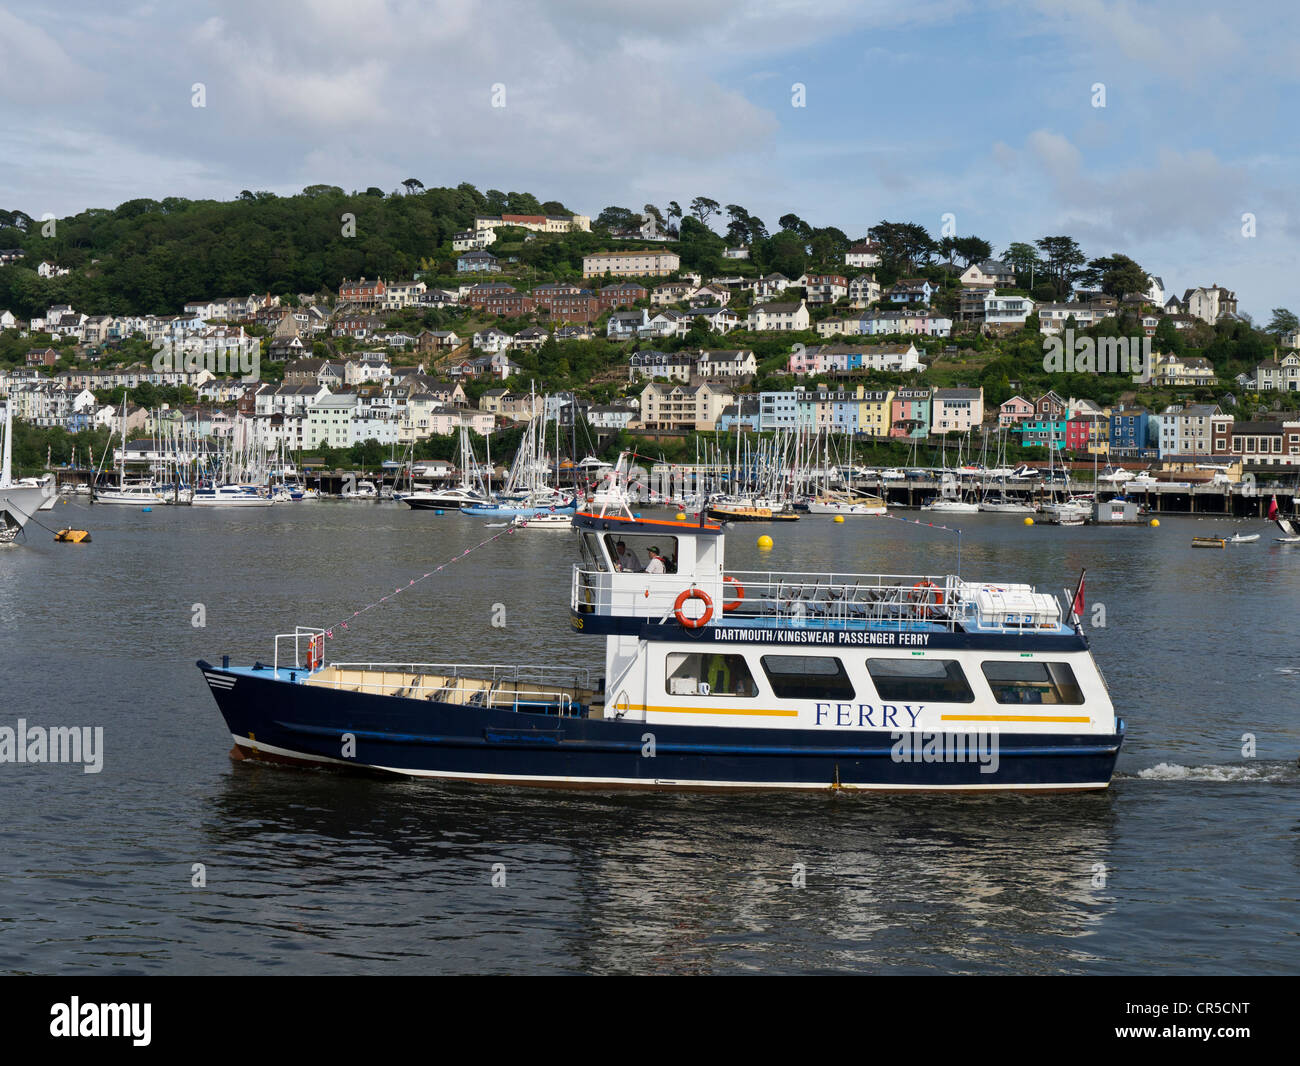 The Dartmouth To Kingswear Passenger Ferry runs upstream on the River Dart in Devon England. Stock Photo